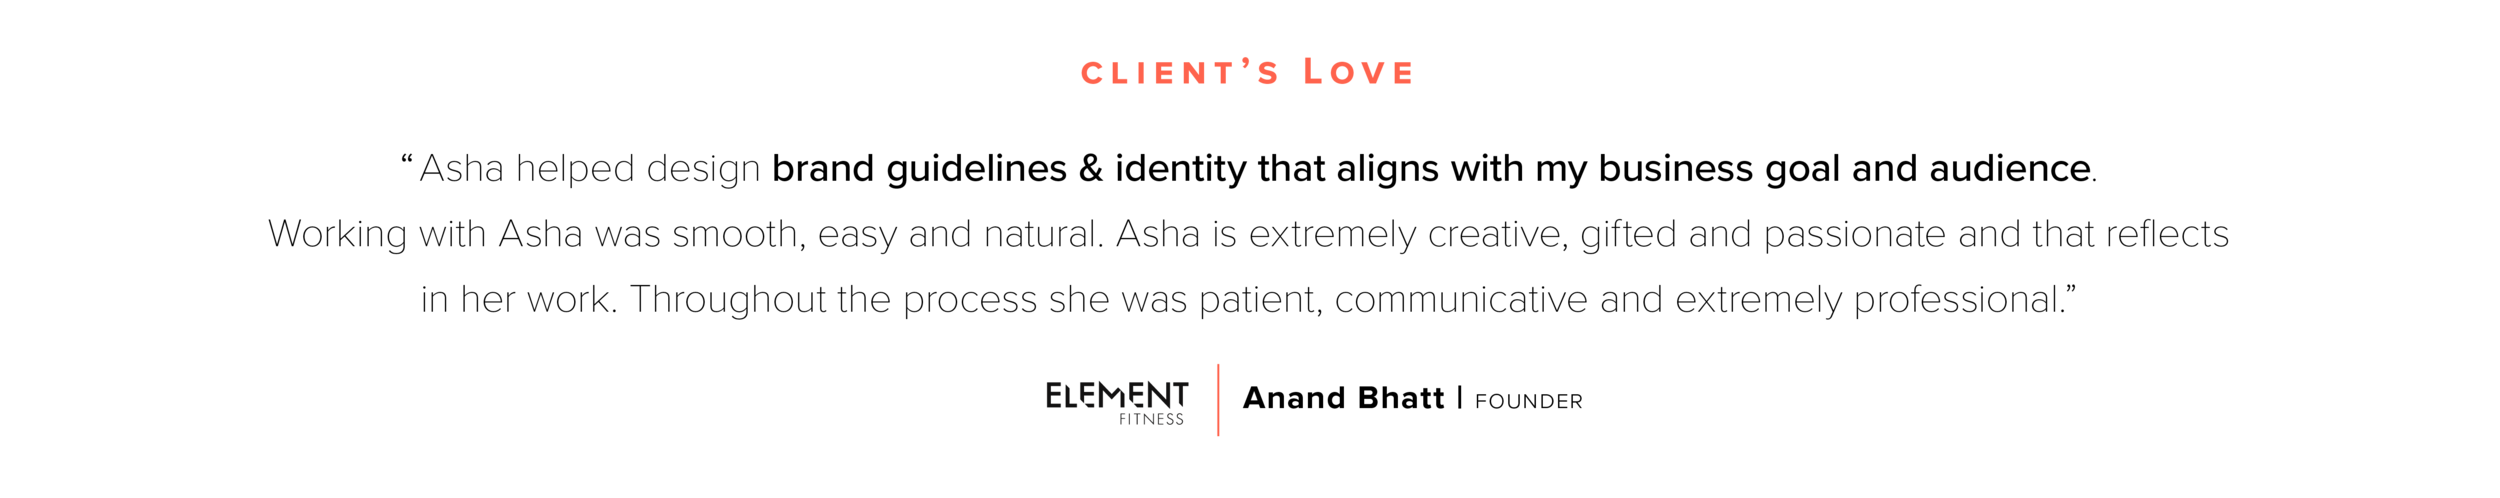 Client's love-branding-02.png